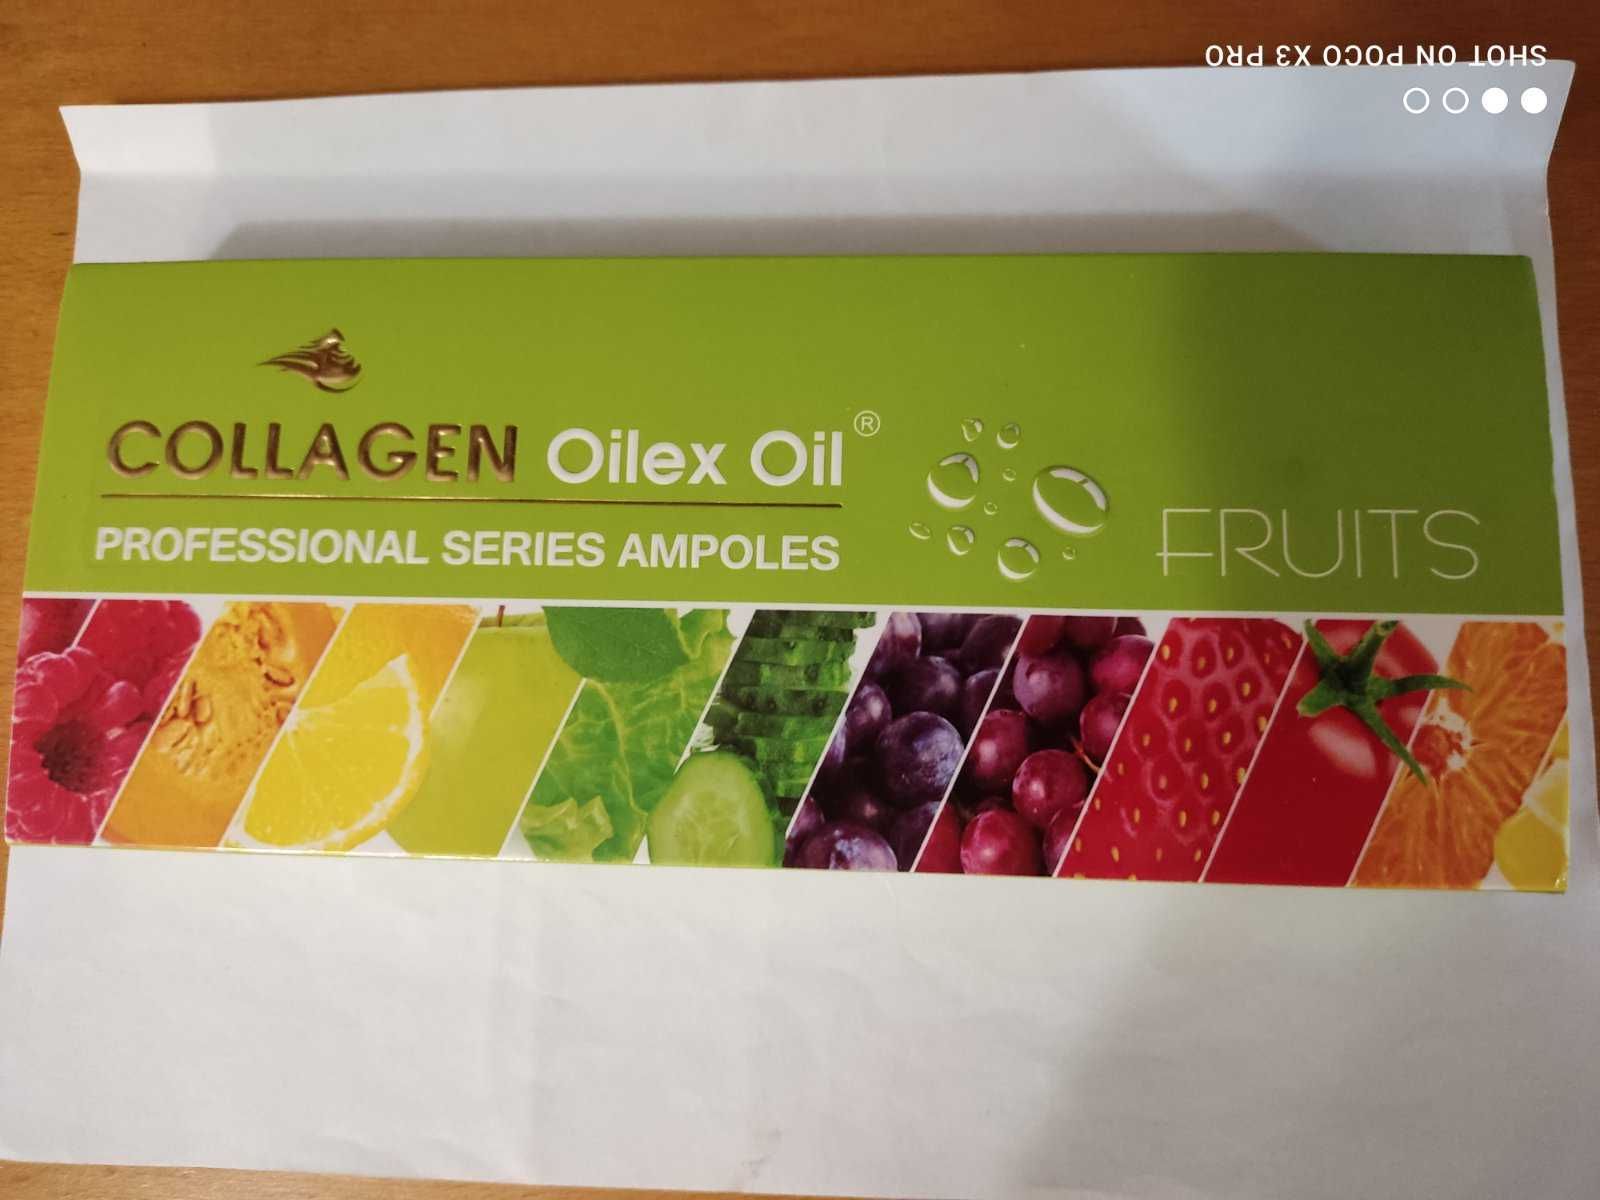 Collagen oilex oil (fruits) professional series ampoles (египет)